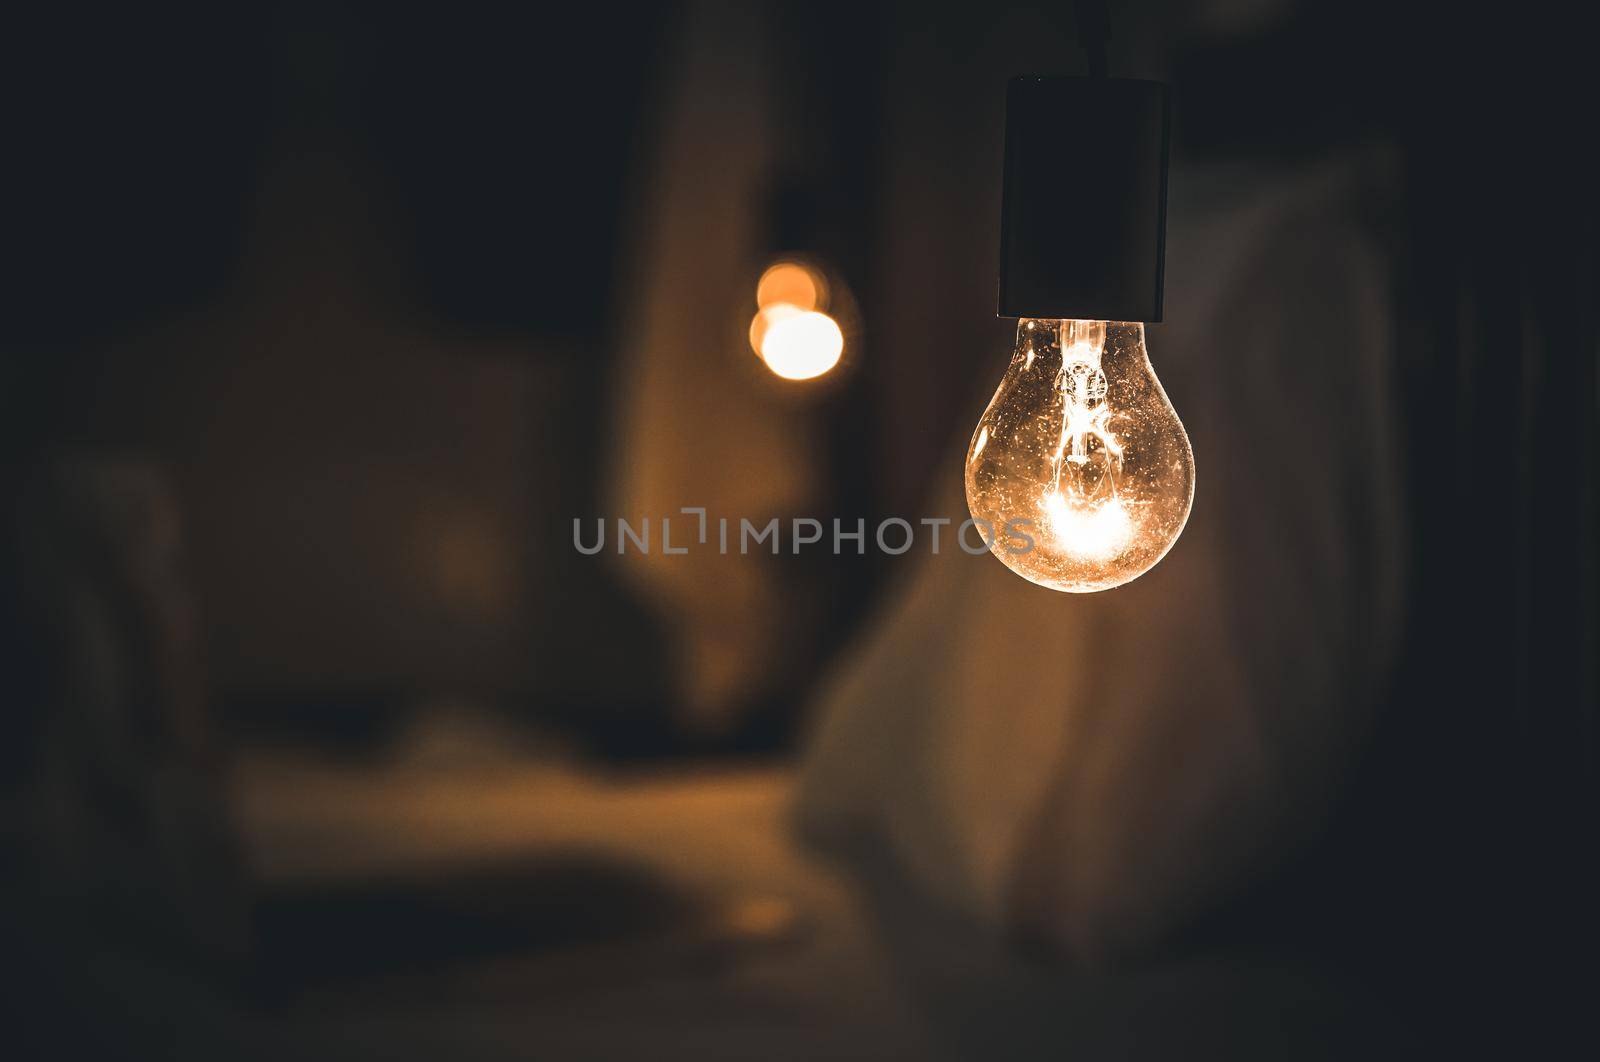 Vitange retro light in Dark blur Bed room